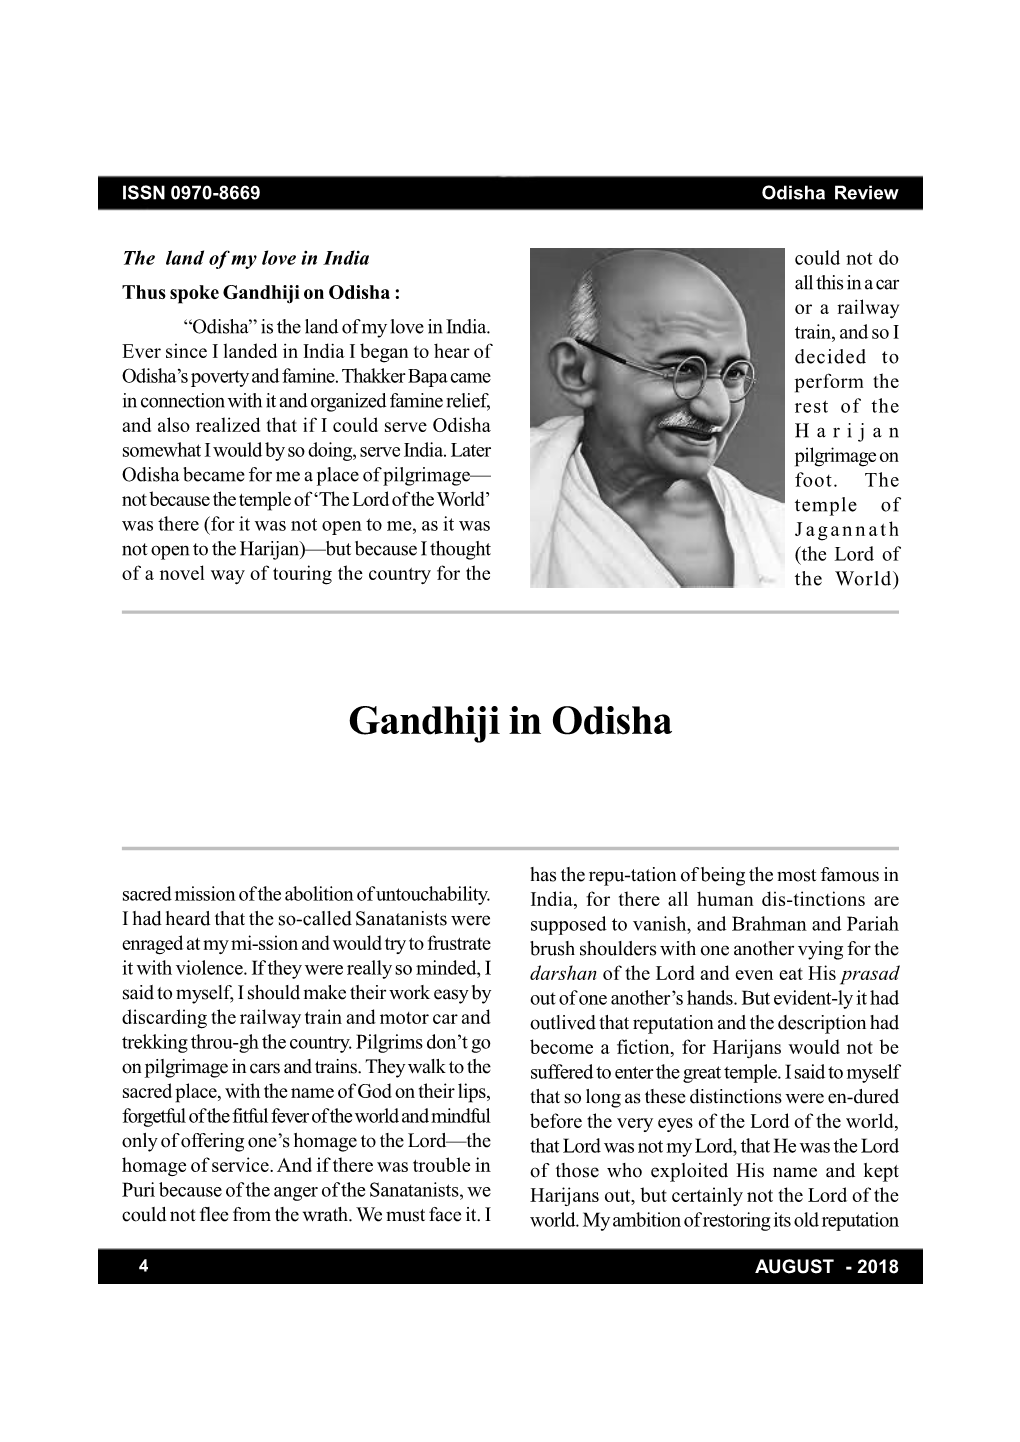 Gandhiji in Odisha